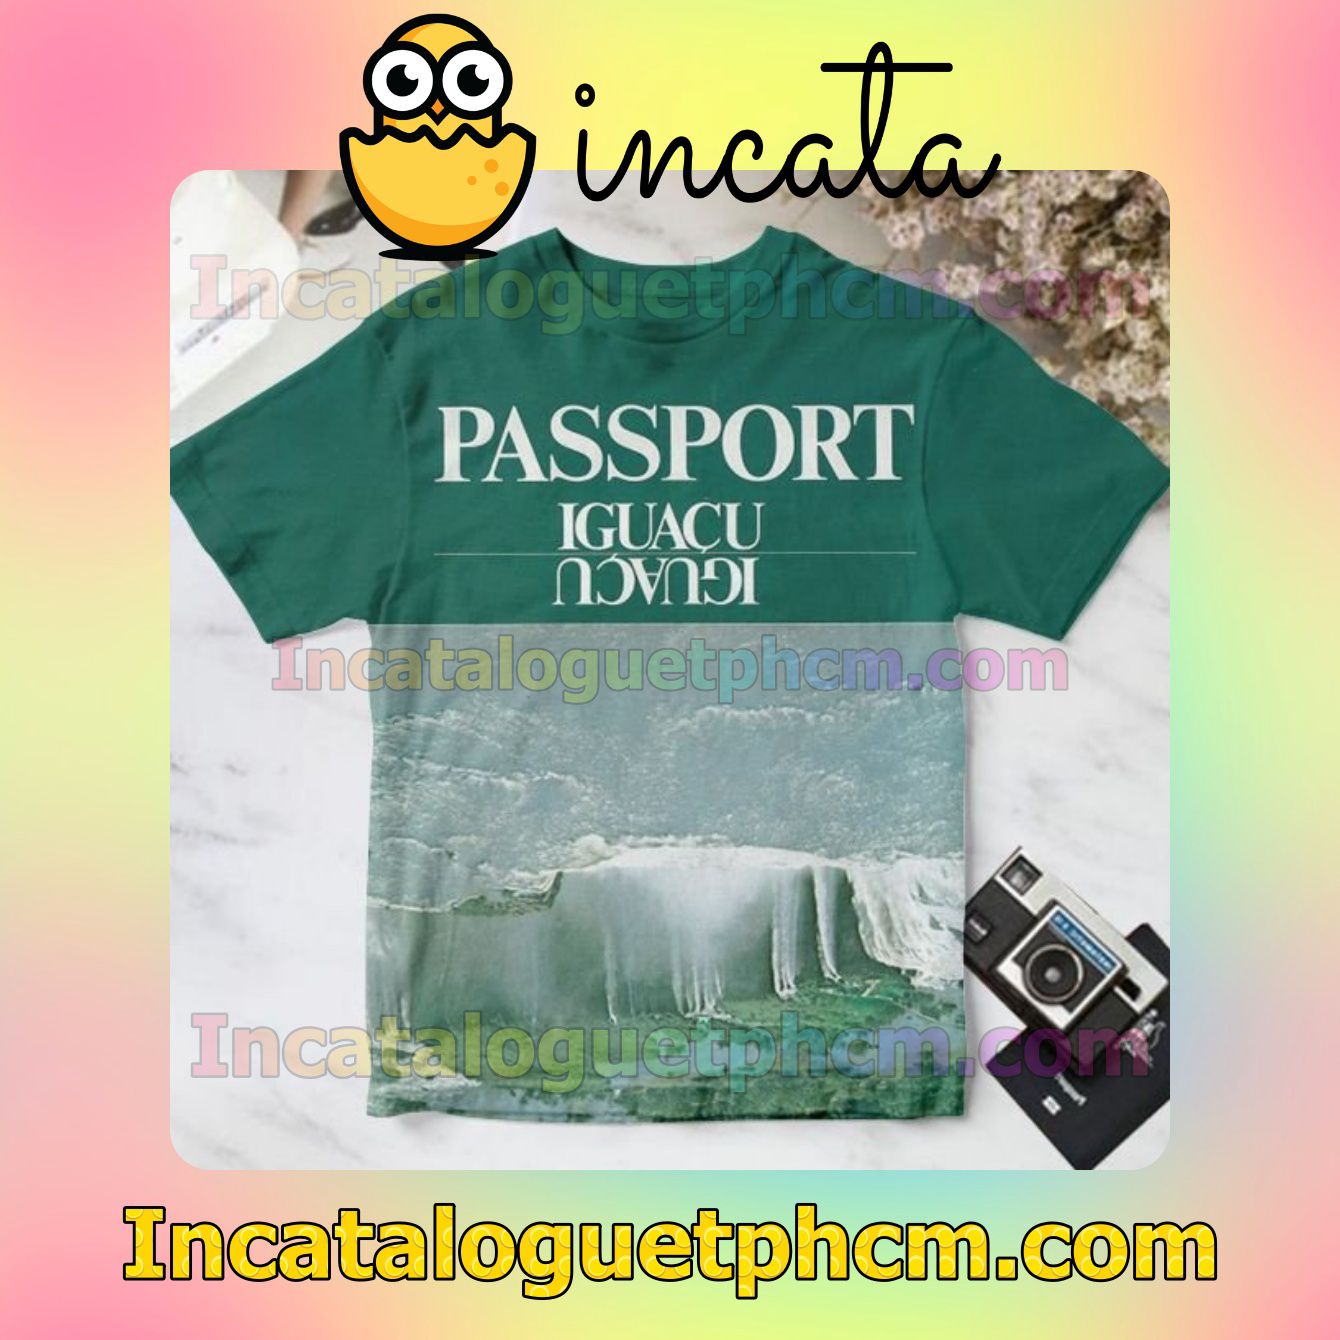 Passport Iguacu Album Cover For Fan Shirt